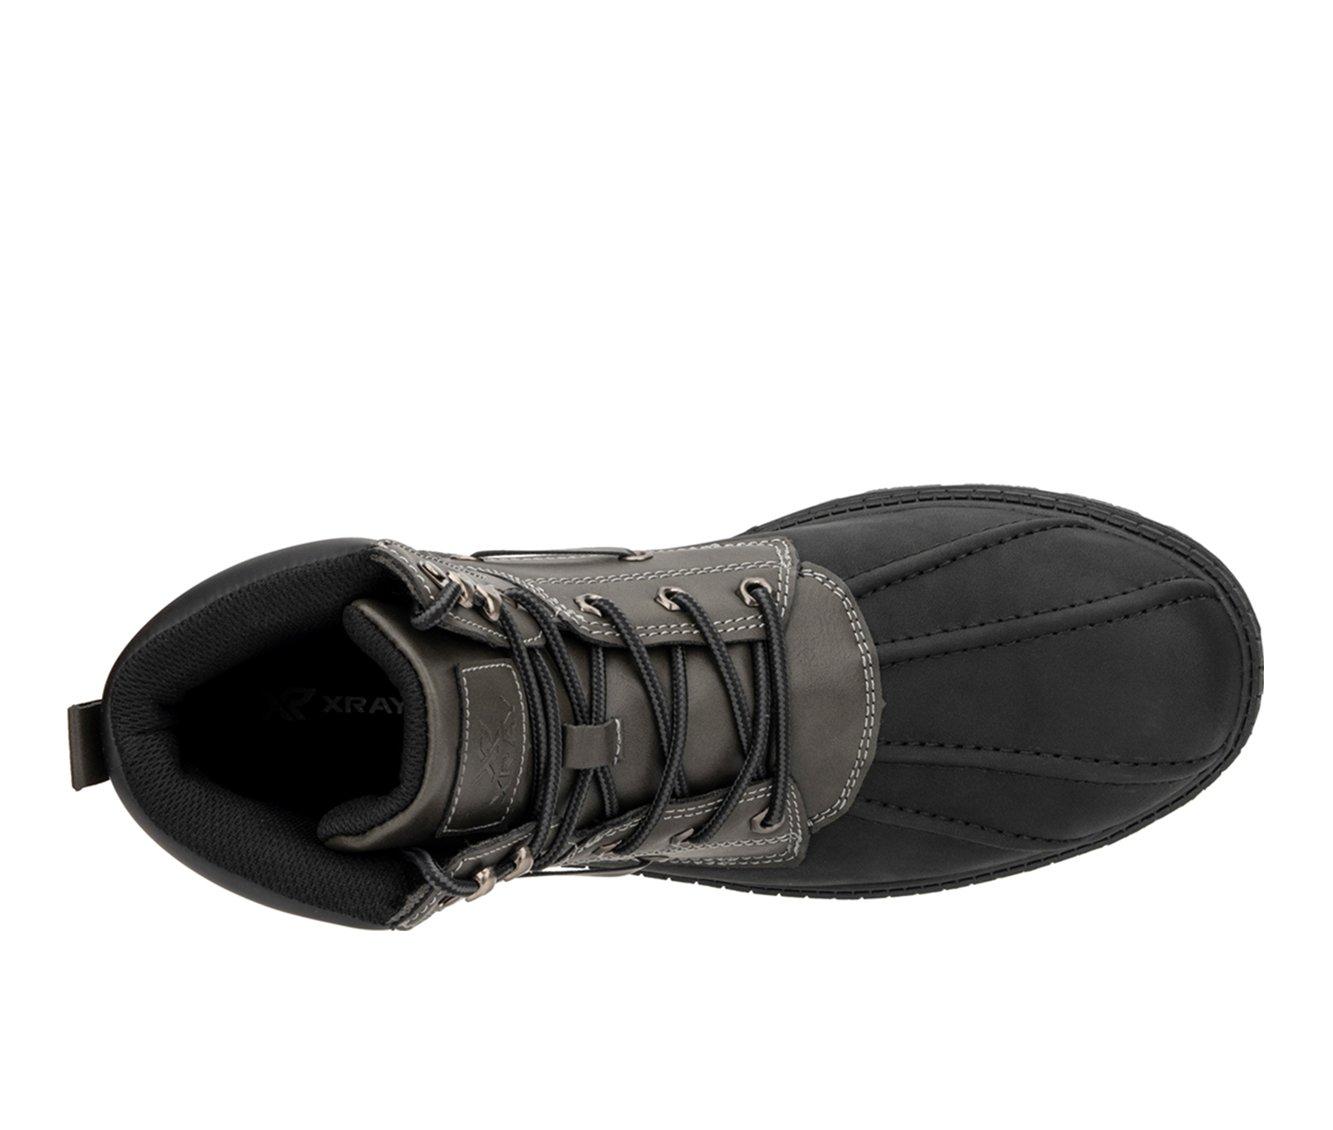 Men's Xray Footwear Blythe Winter Boots